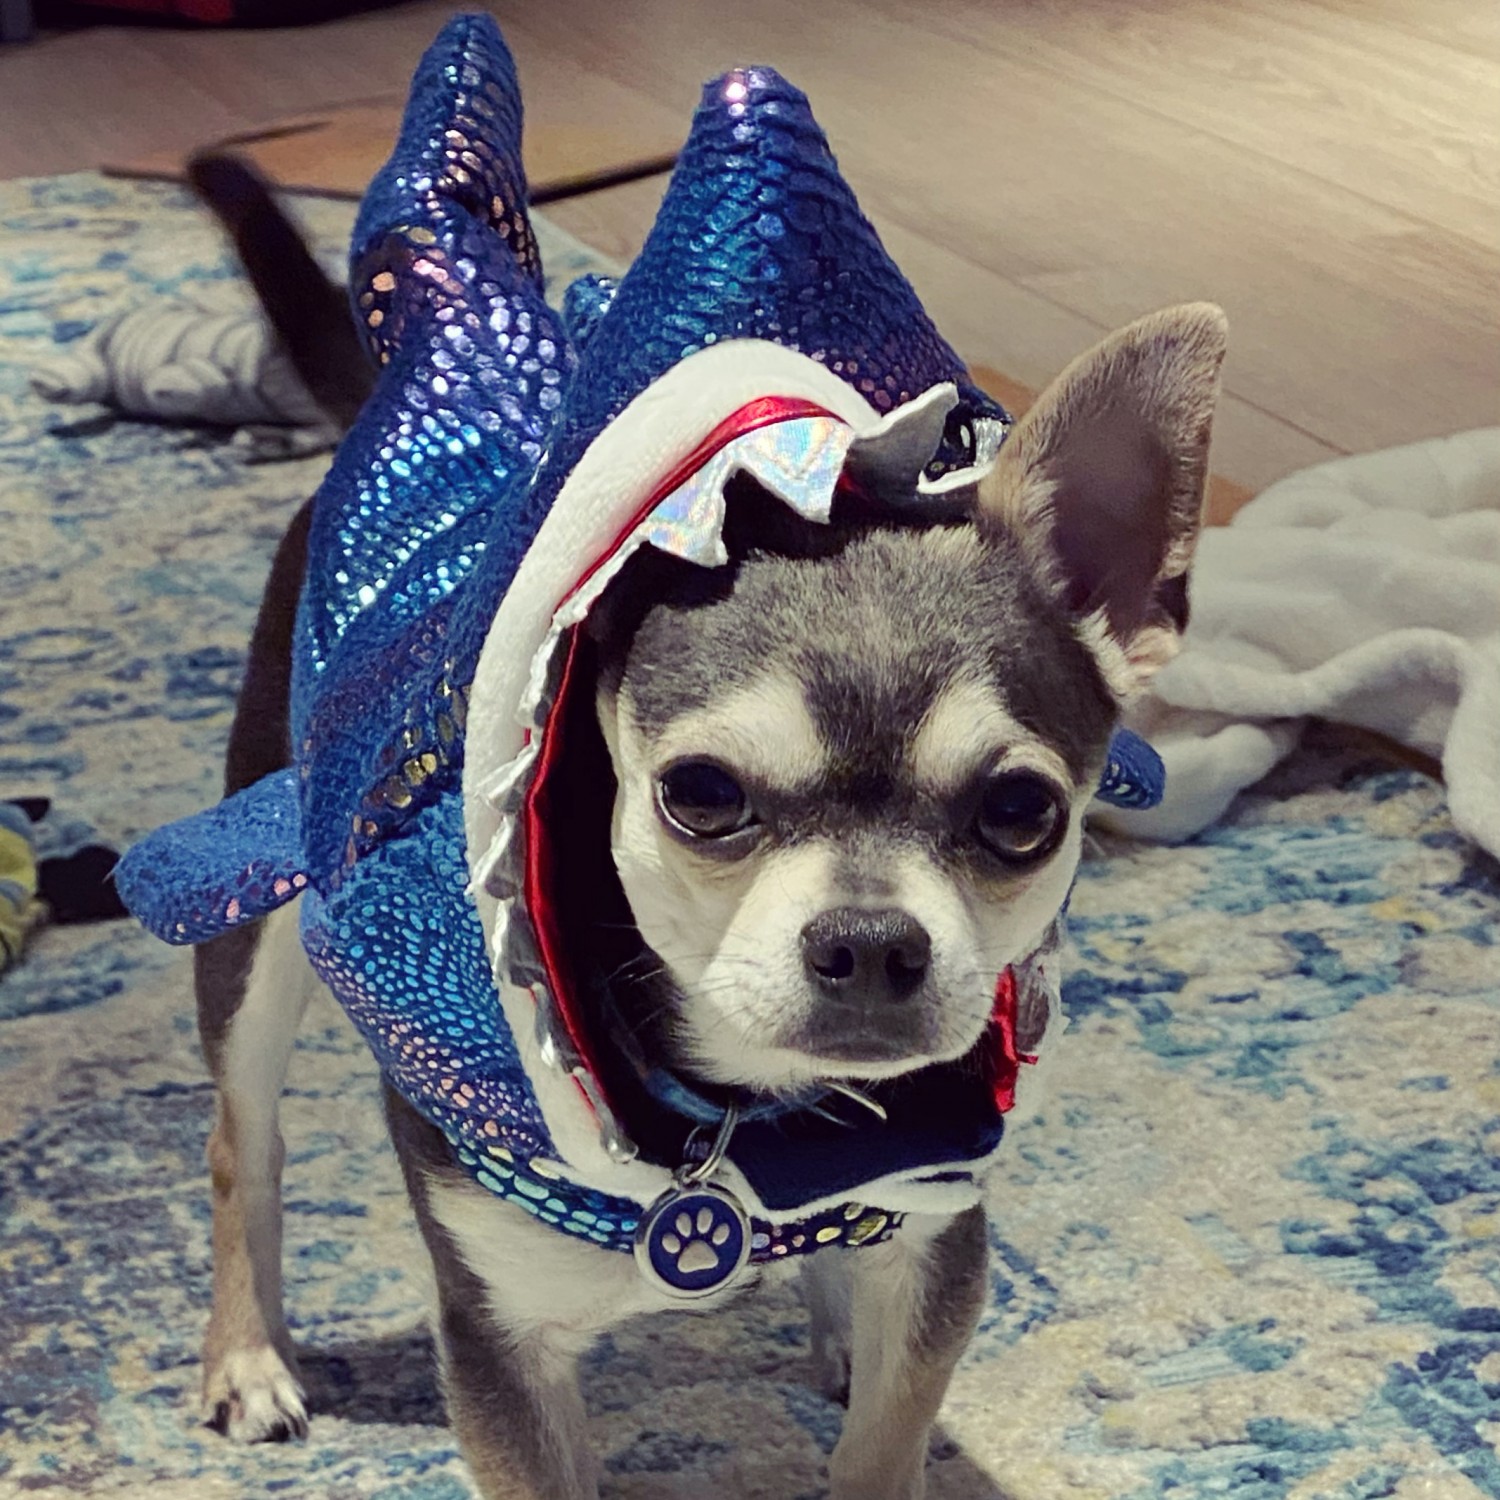 Chihuahua wearing a shark costume